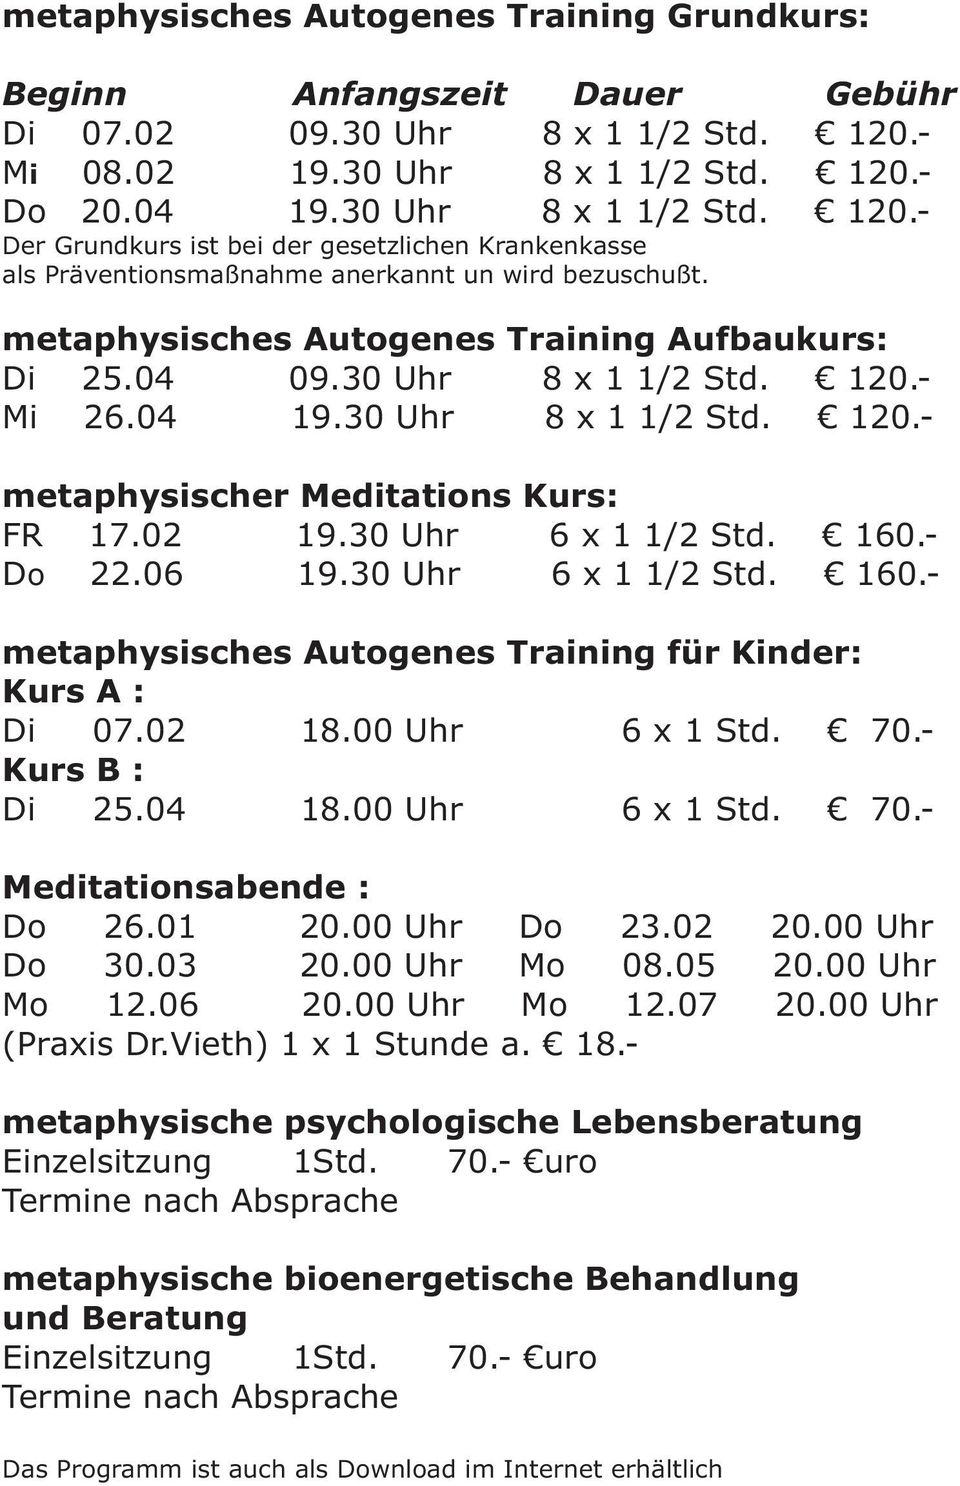 metaphysisches Autogenes Training Aufbaukurs: Di 25.04 09.30 Uhr 8 x 1 1/2 Std. 120.- Mi 26.04 19.30 Uhr 8 x 1 1/2 Std. 120.- metaphysischer Meditations Kurs: FR 17.02 19.30 Uhr 6 x 1 1/2 Std. 160.